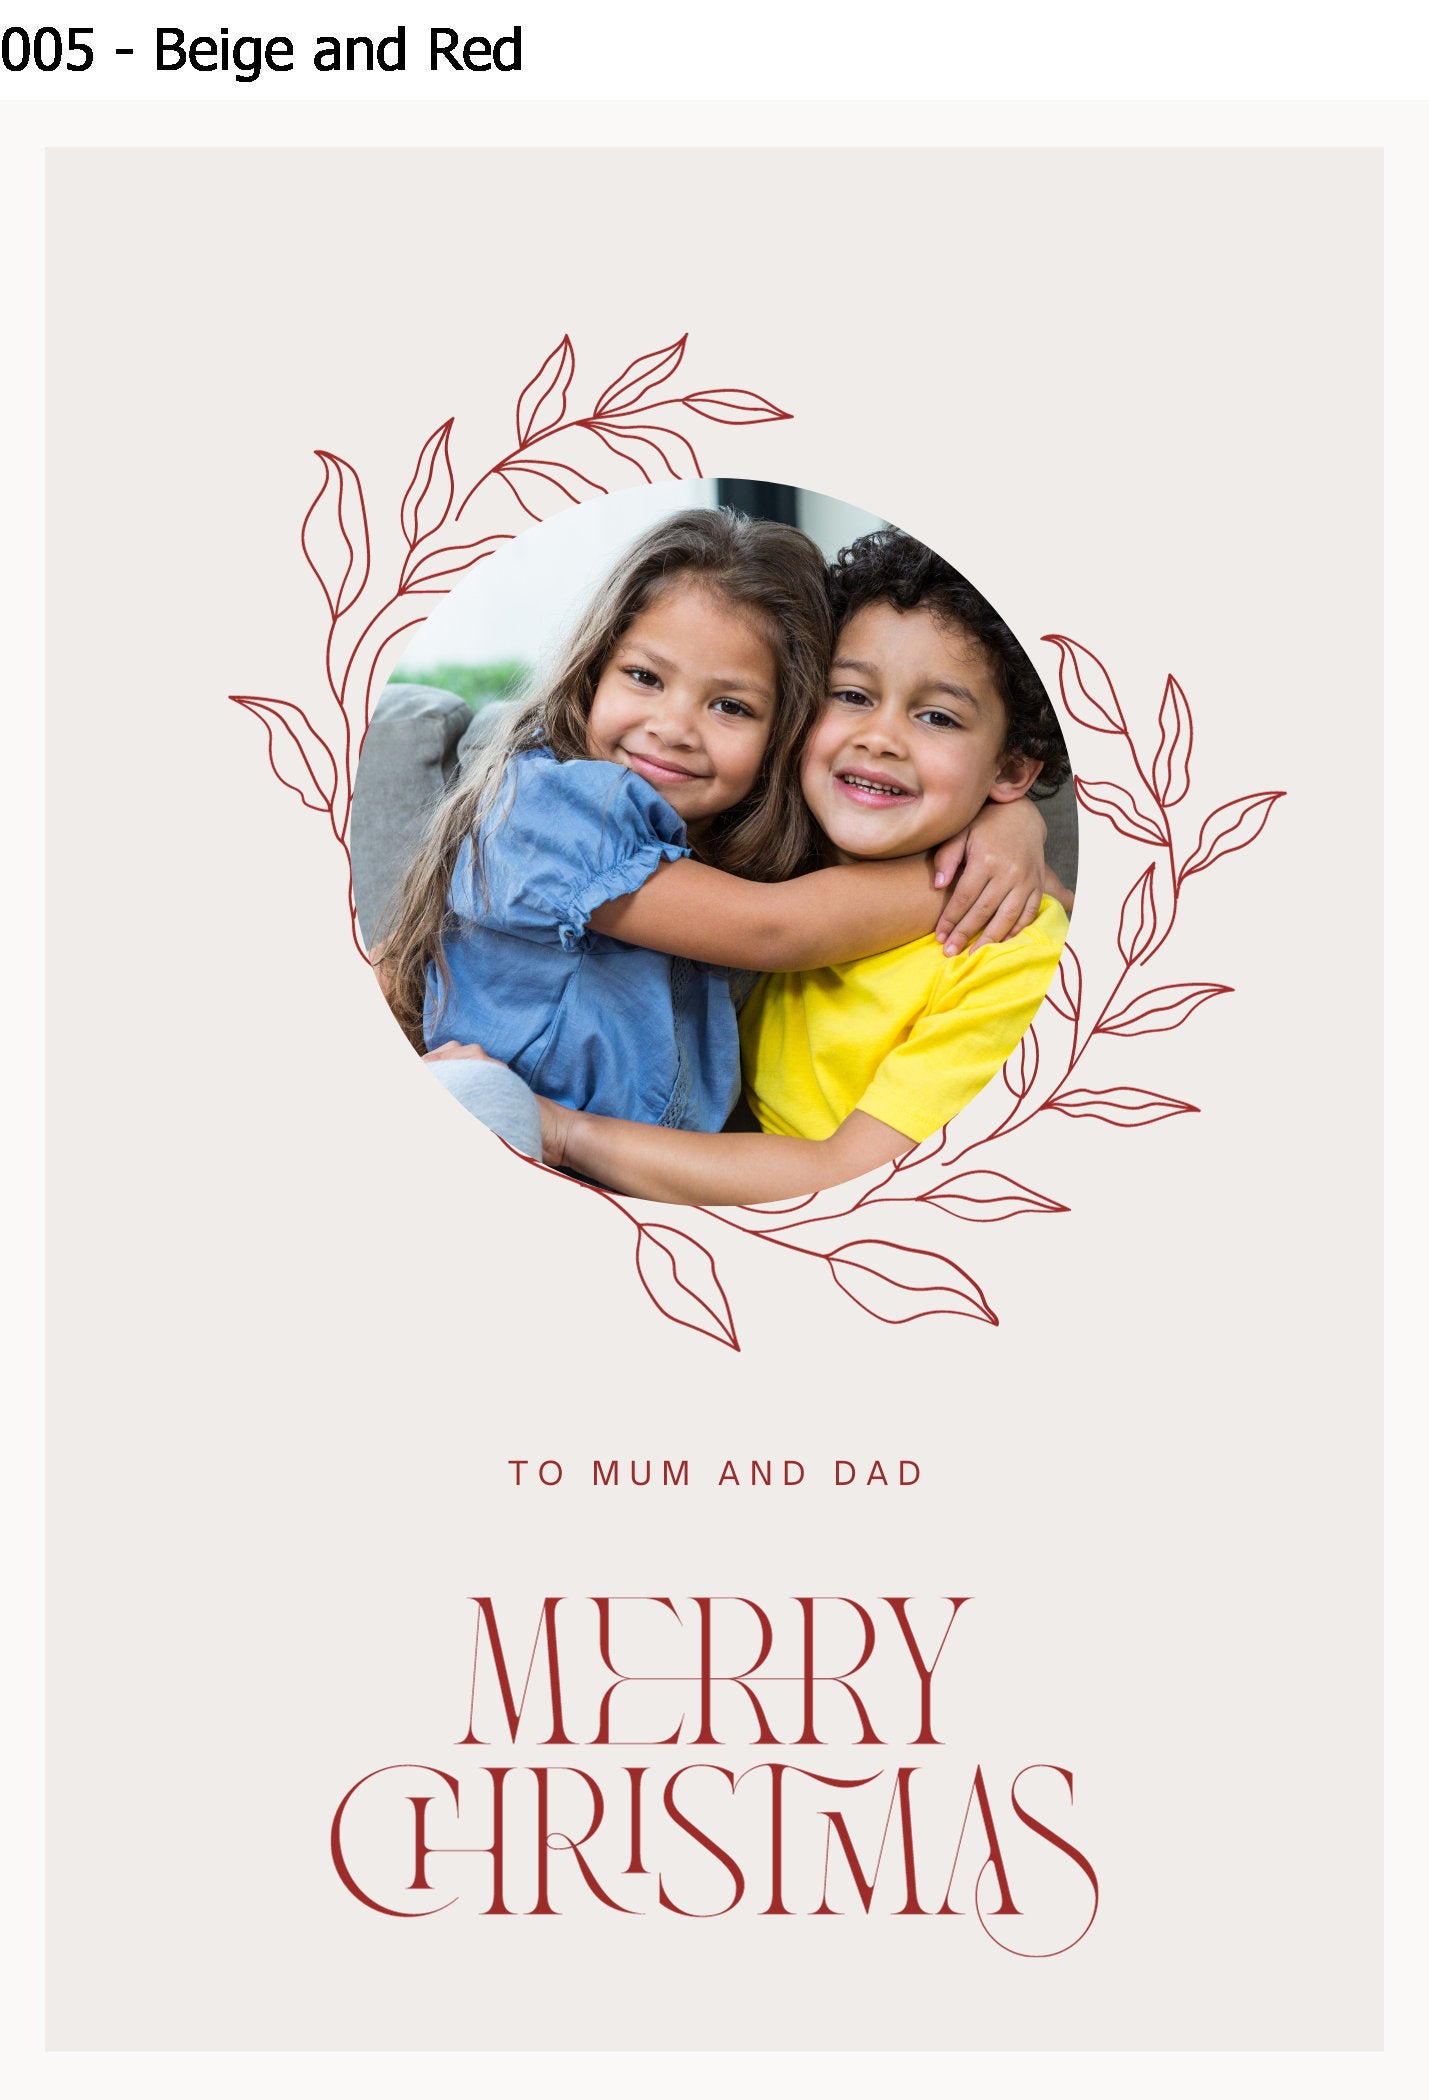 Custom photo Christmas card, personalised card, personalised gift, photo card, custom photo greeting card, personalised Christmas card